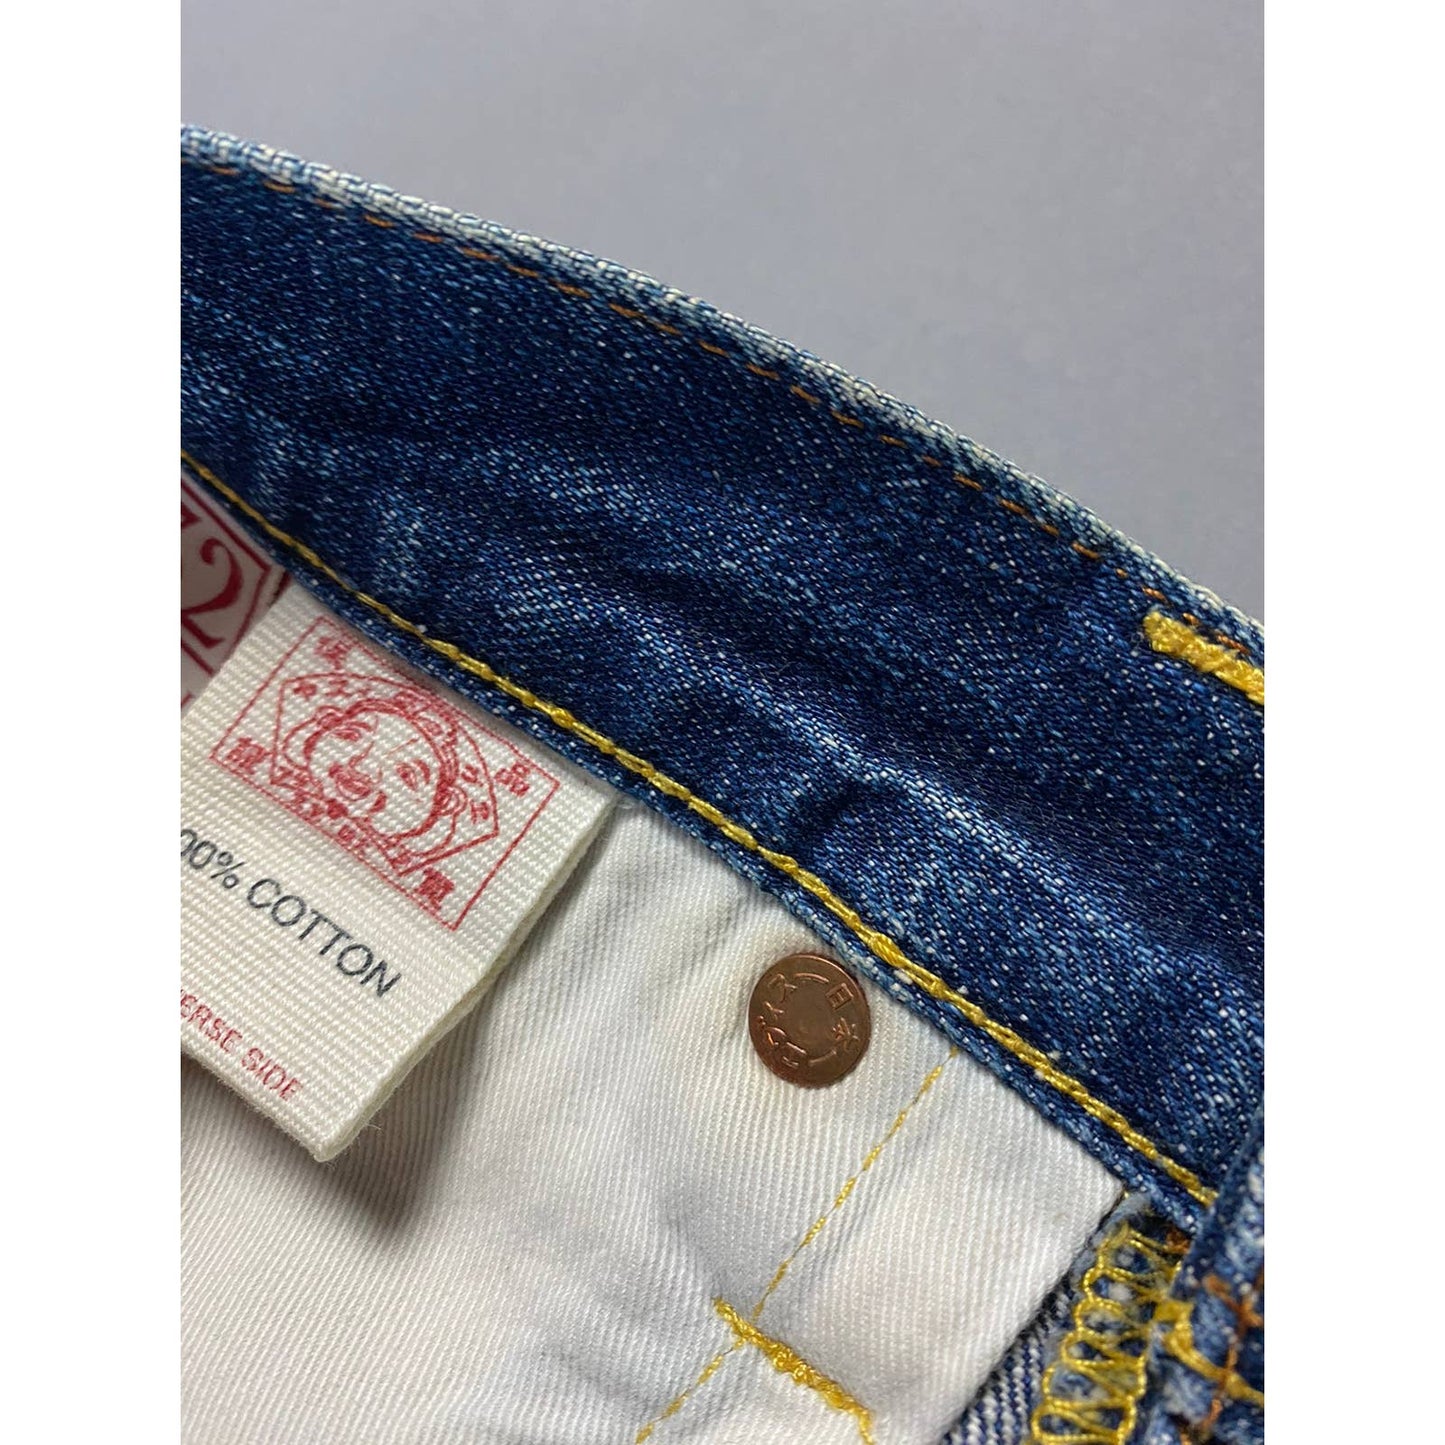 Evisu jeans daicock vintage selvedge denim Paris big logo